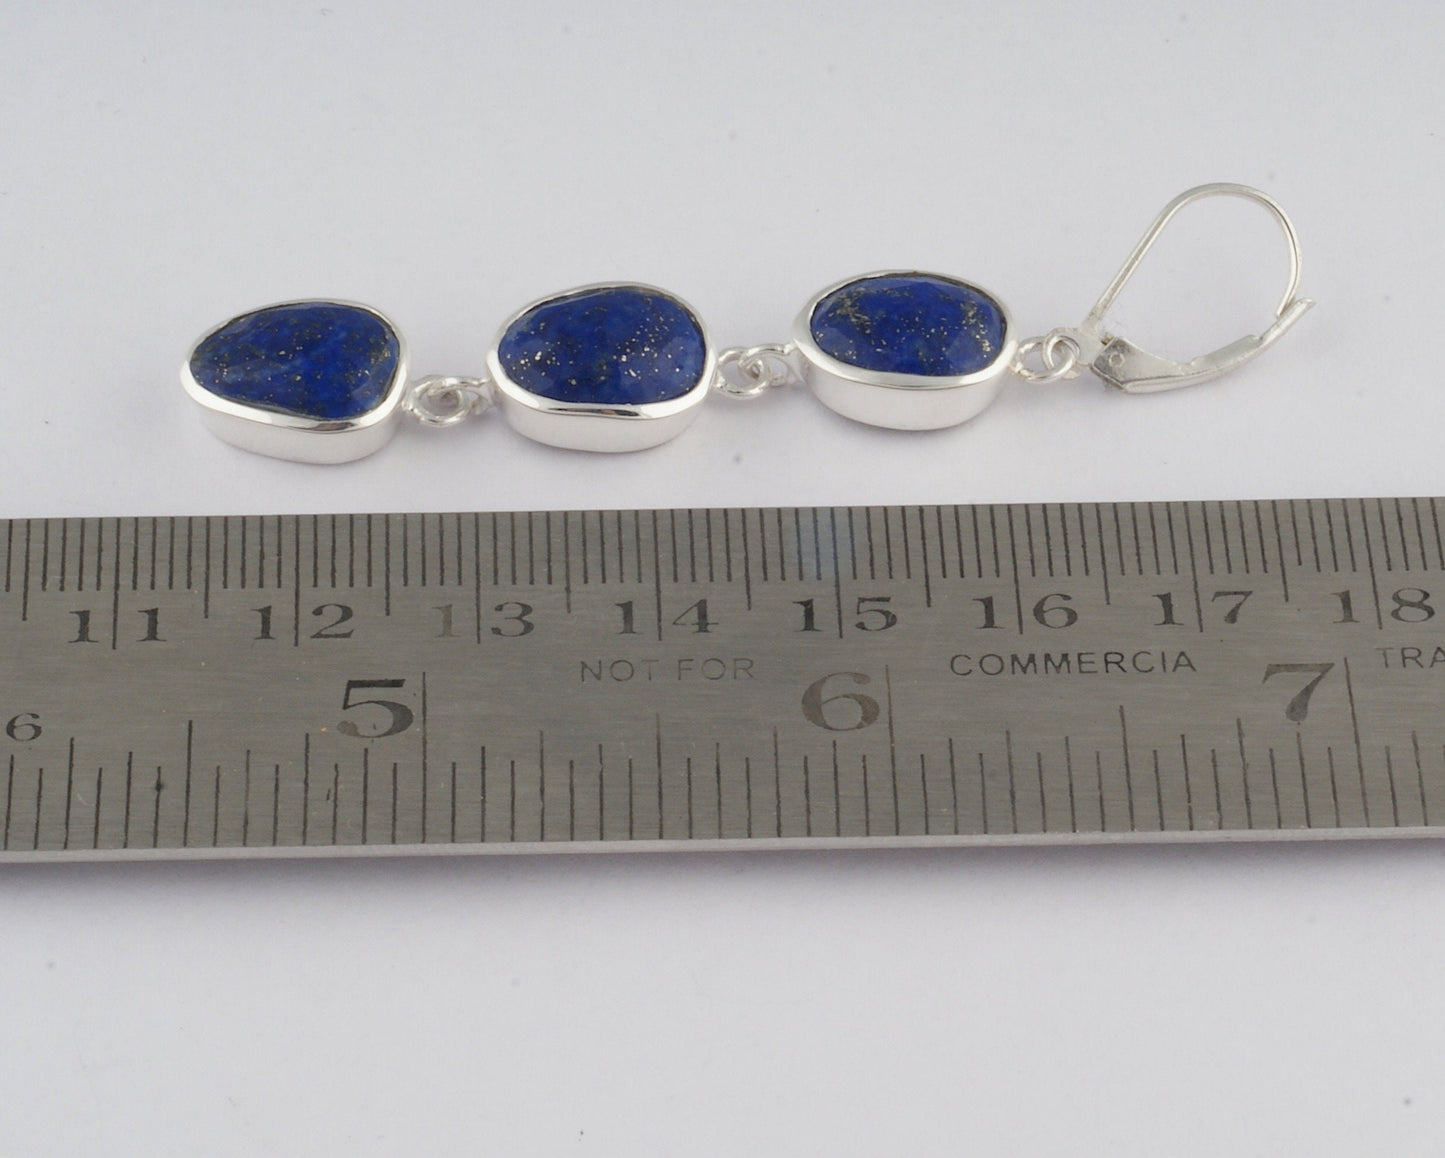 Solid 925 Sterling Silver Rainbow Moonstone / Lapis Lazuli Earrings, Handmade, Gift for Her / Birthday / Anniversary,/ Euroclip